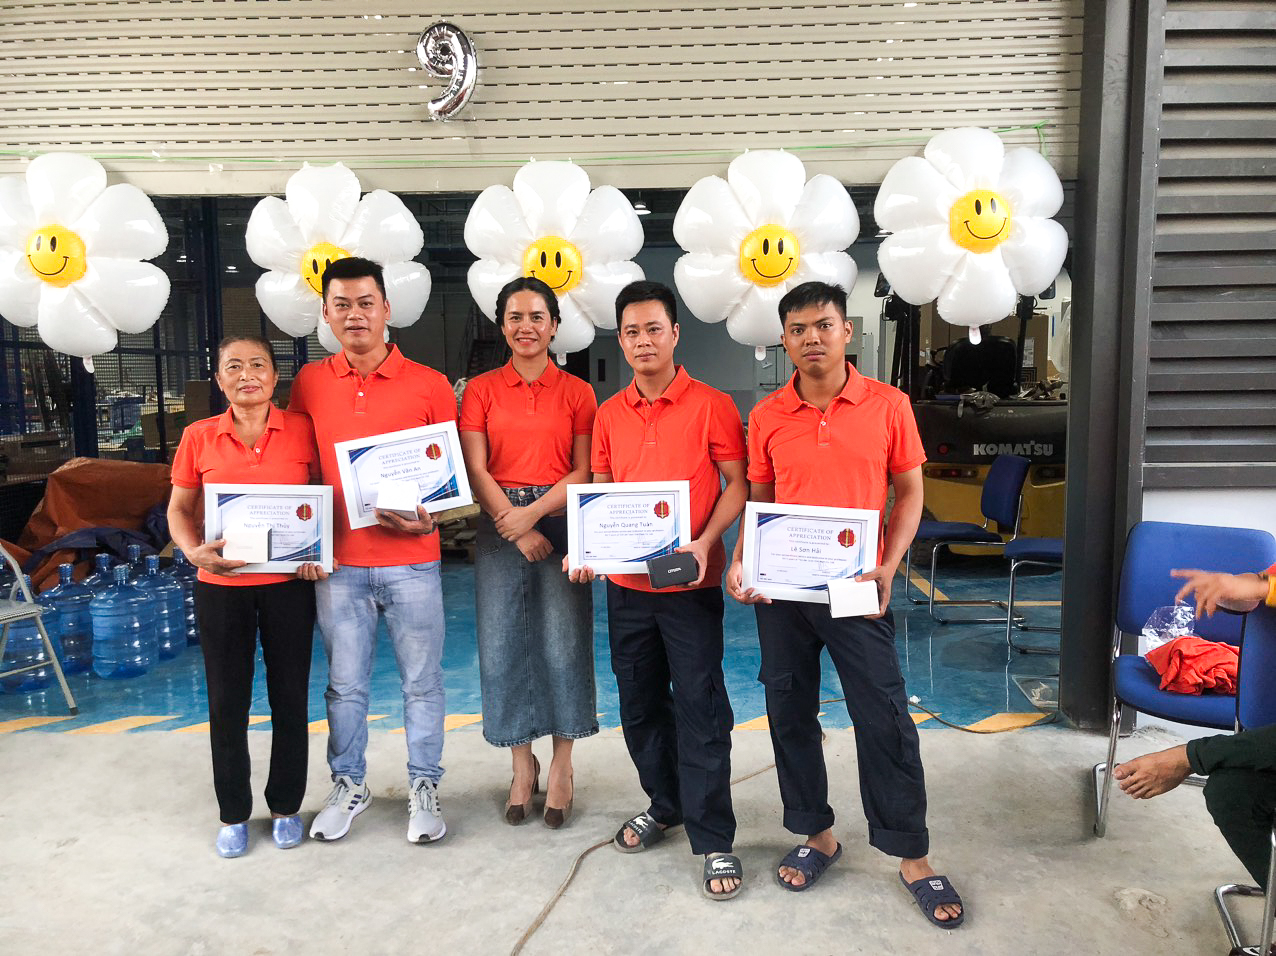 1-royal-van-der-leun-certificate-vietnam-5-years-employees-2